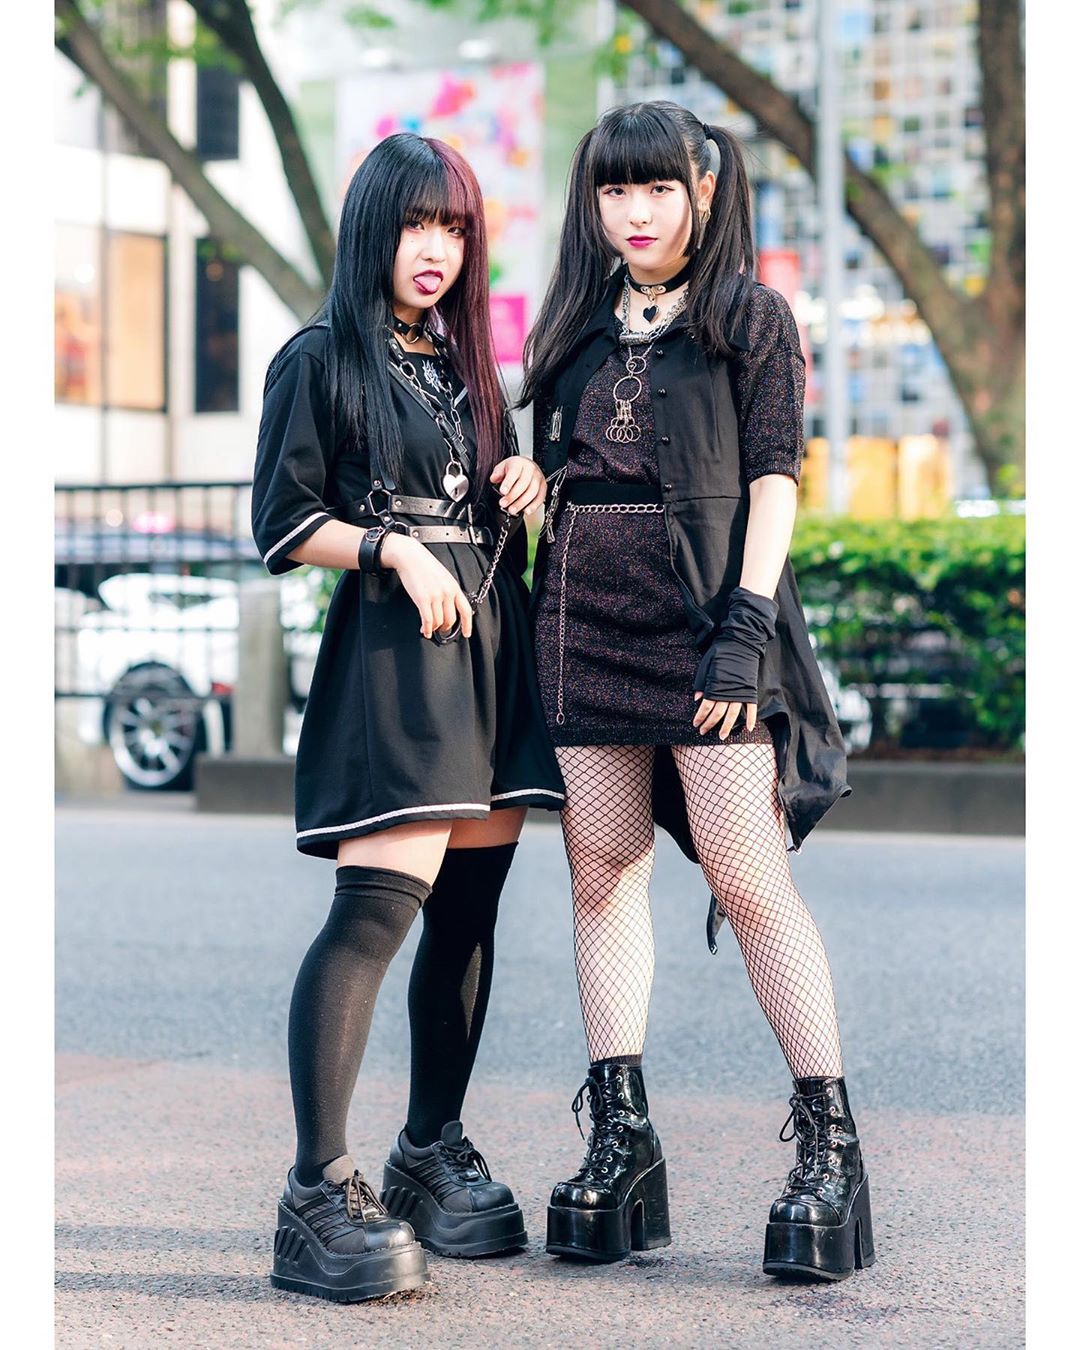 Tokyo Fashion: 15-year-old Japanese students @Kyopppe and Mashu ...